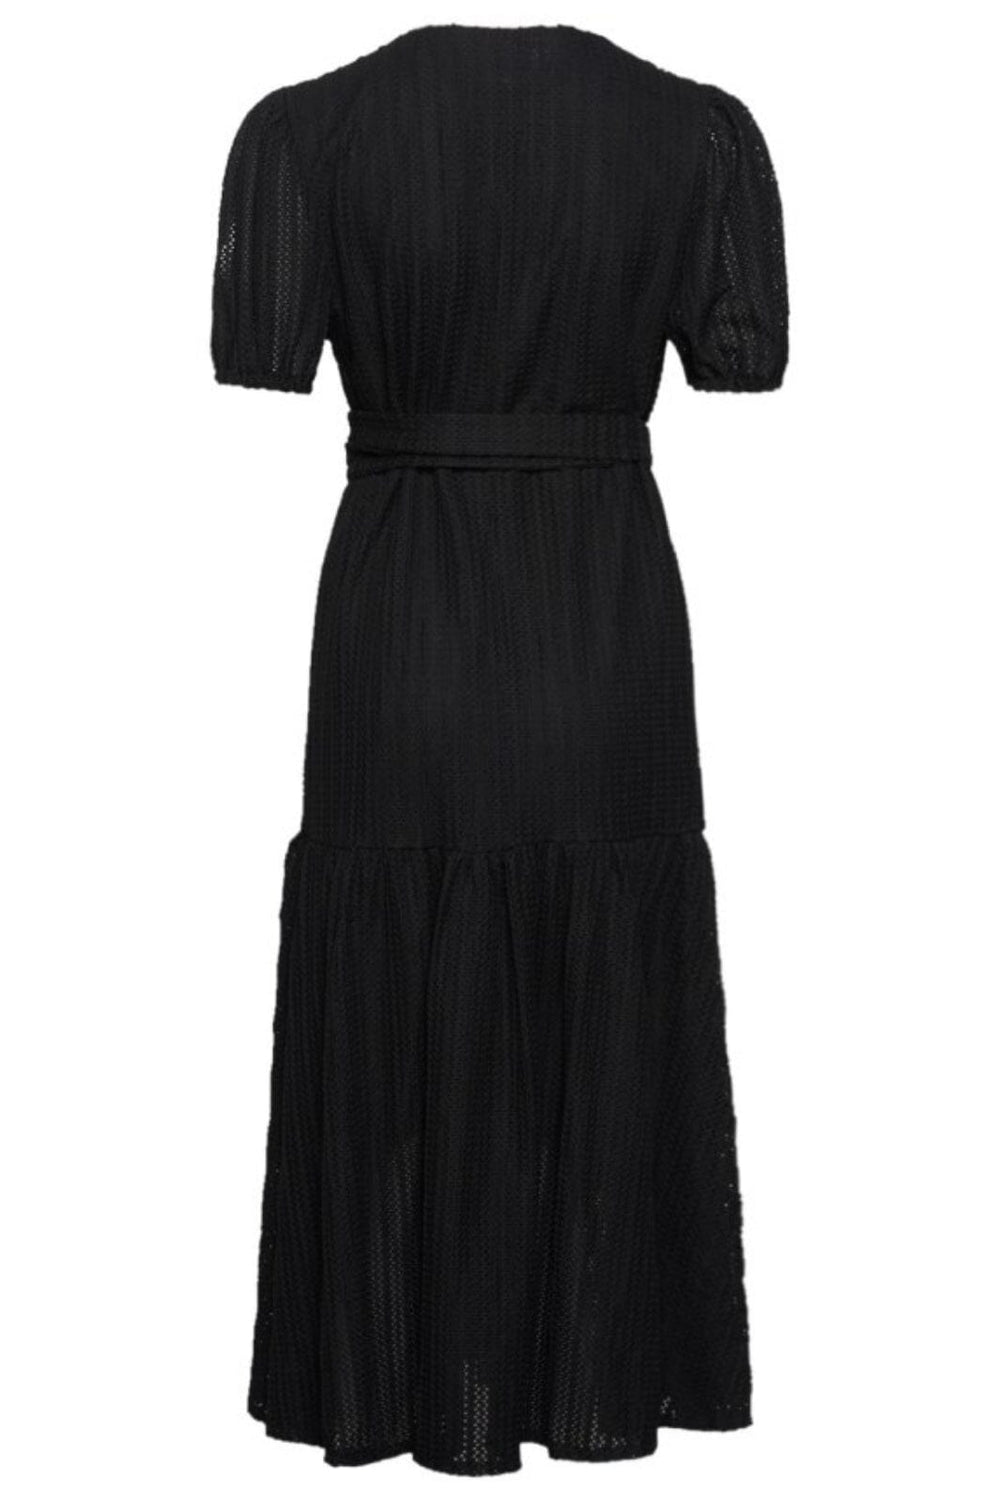 Noella - Rio Wrap Dress - Black Kjoler 